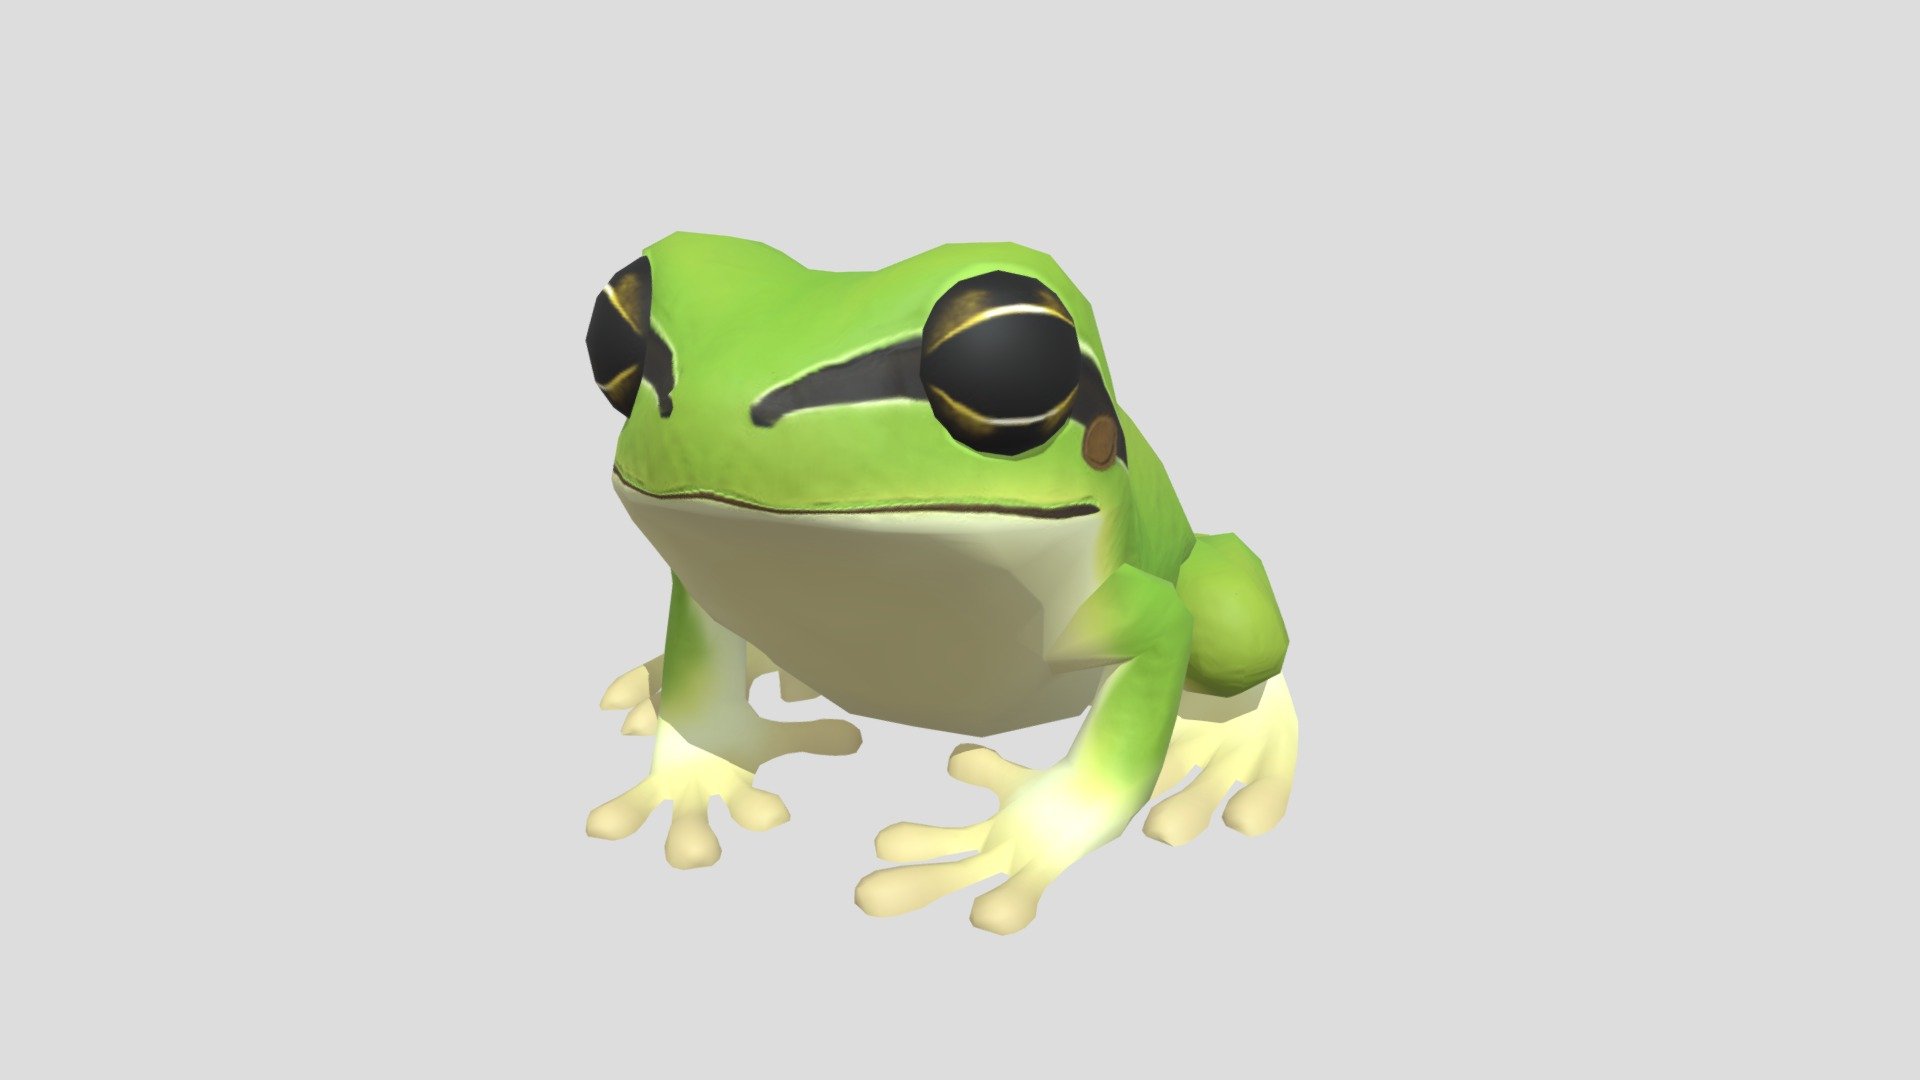 Tree Frog
 アマガエル - Tree Frog アマガエル - 3D model by Mozukui (@redfrogman) 3d model